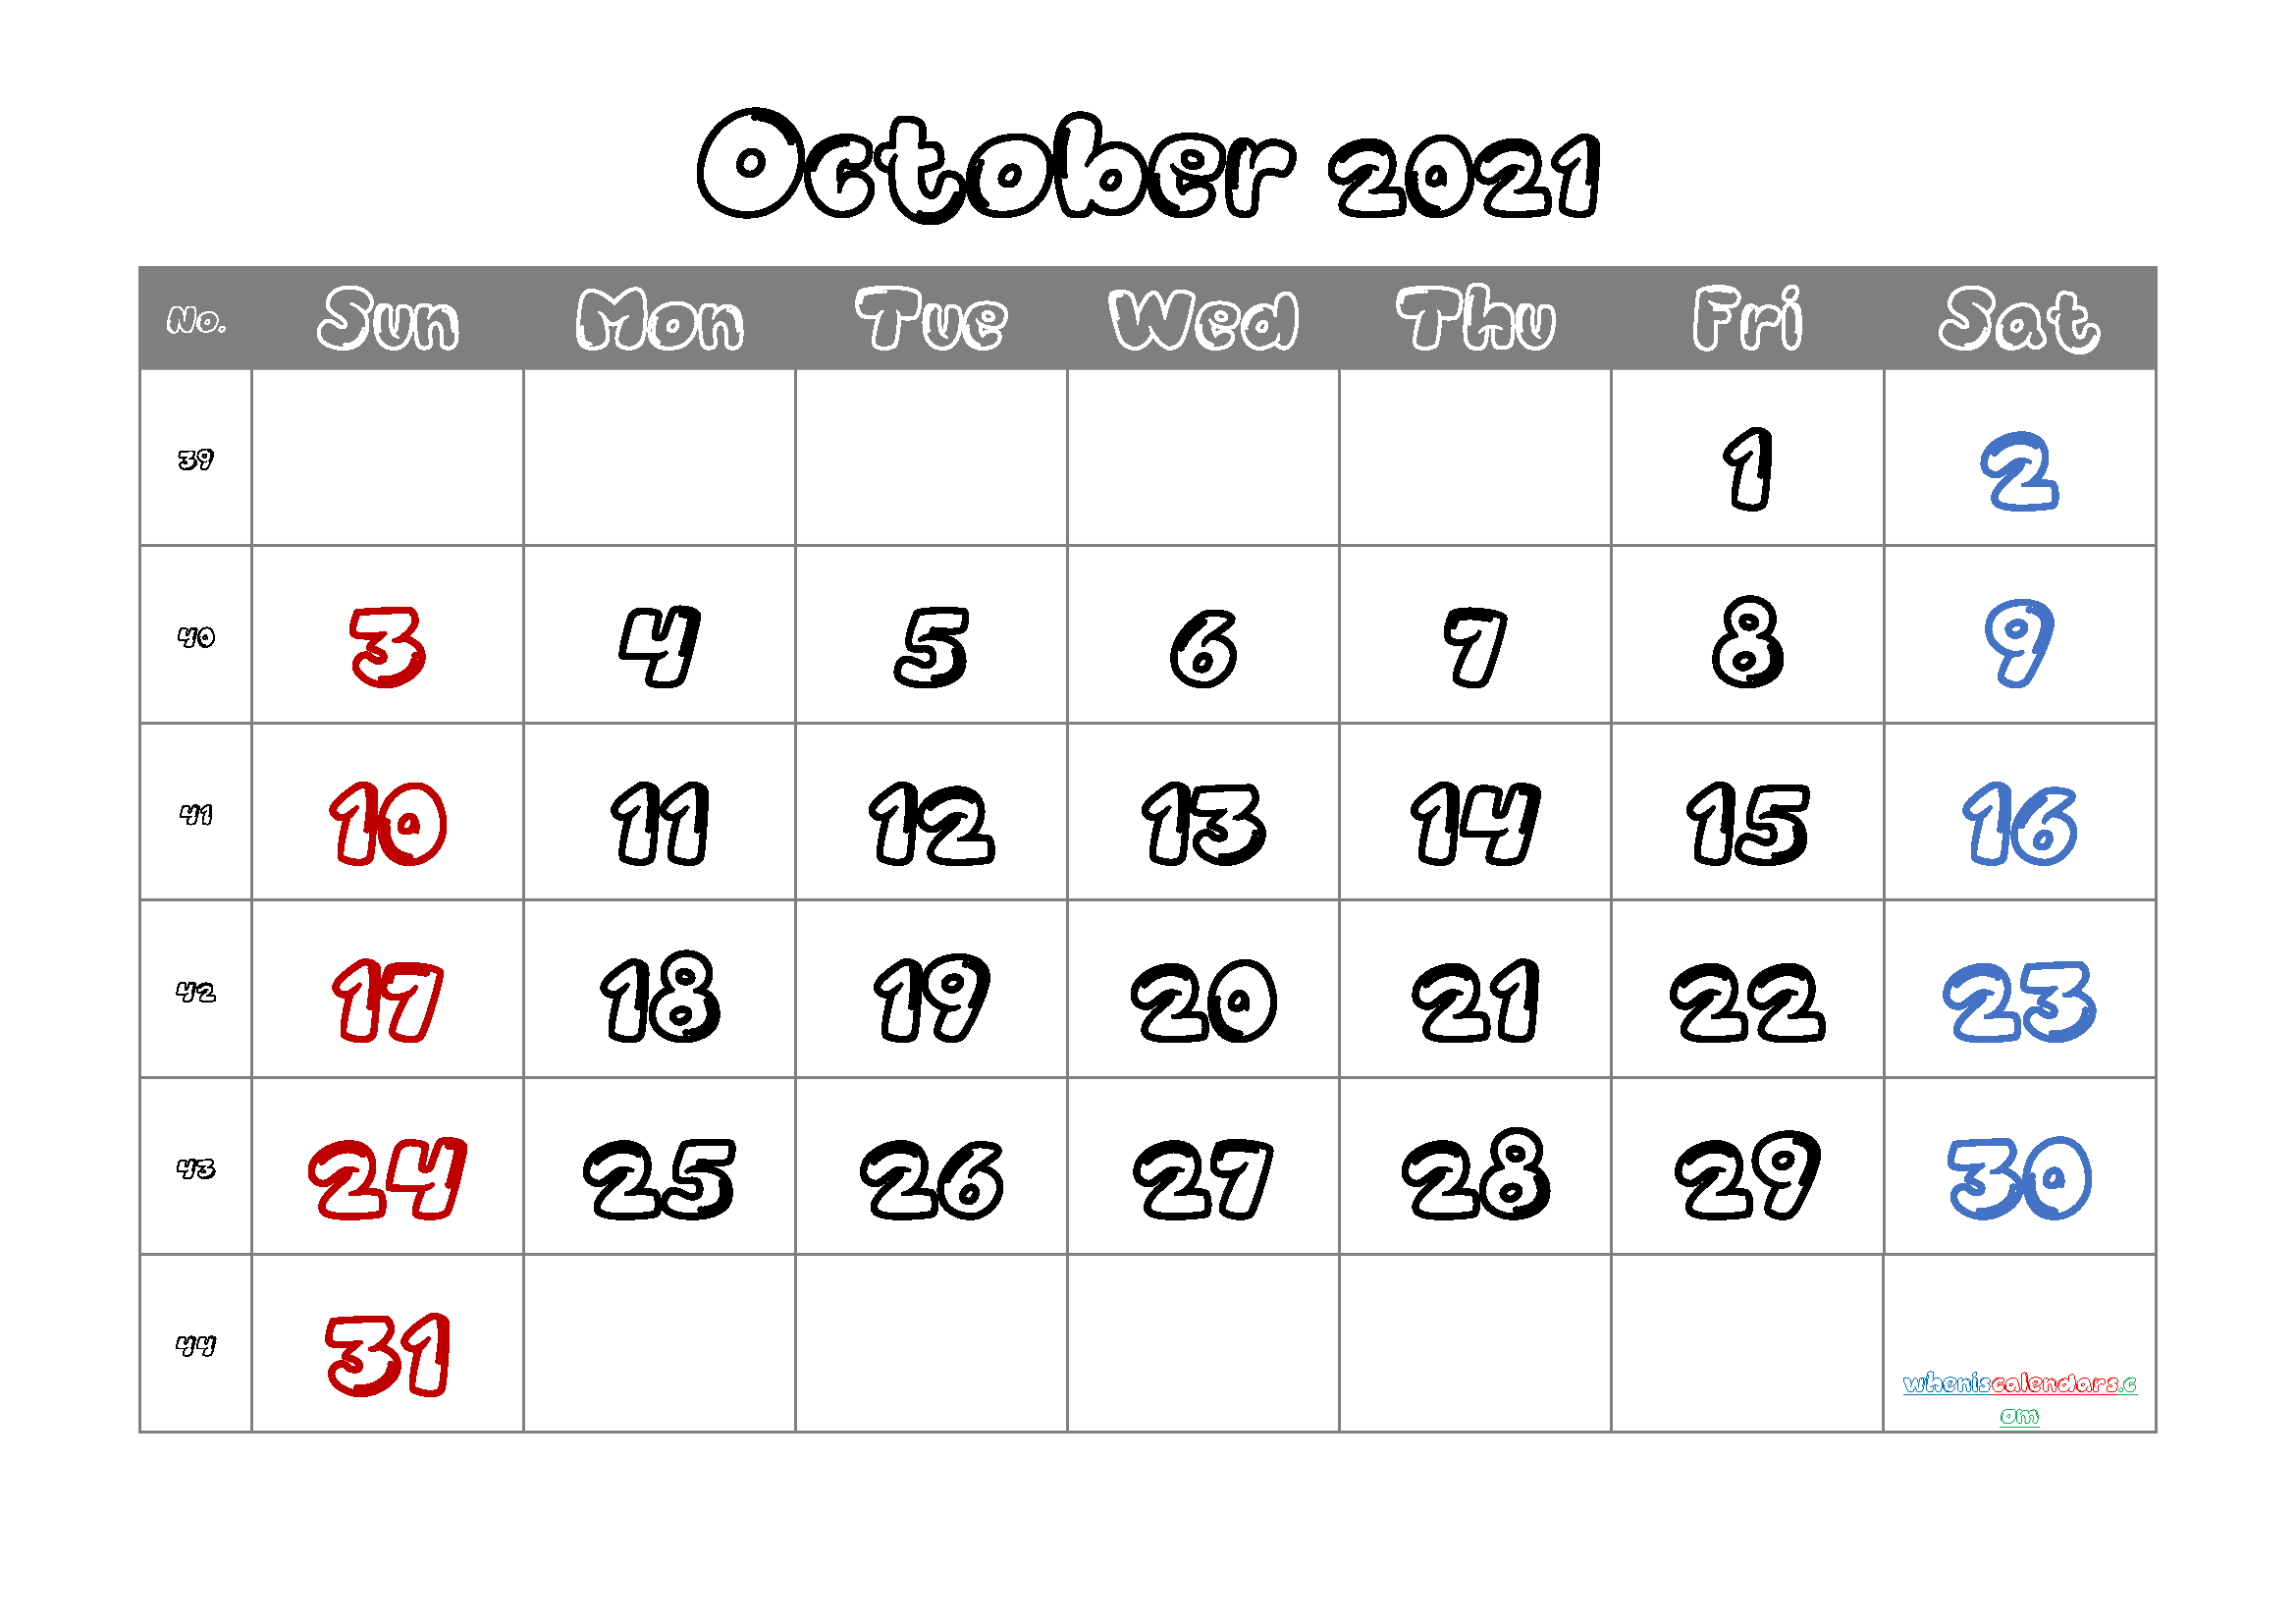 October 2021 Calendar Printable Free